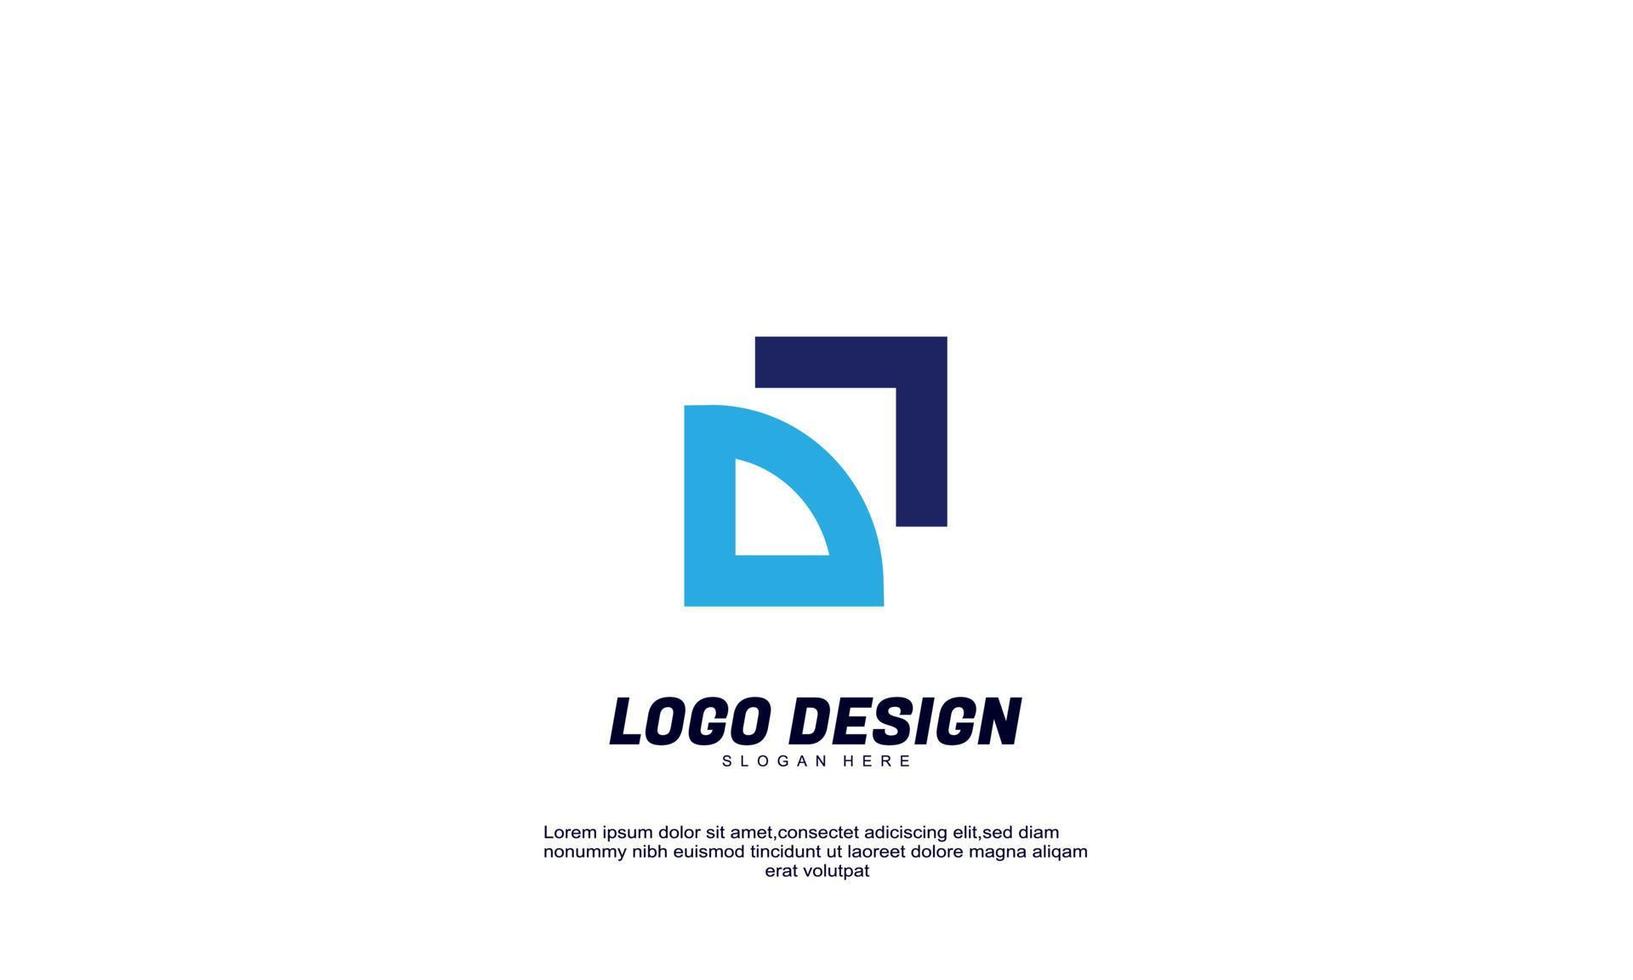 abstract creative economy finance business productivity idea brand logo design template vector